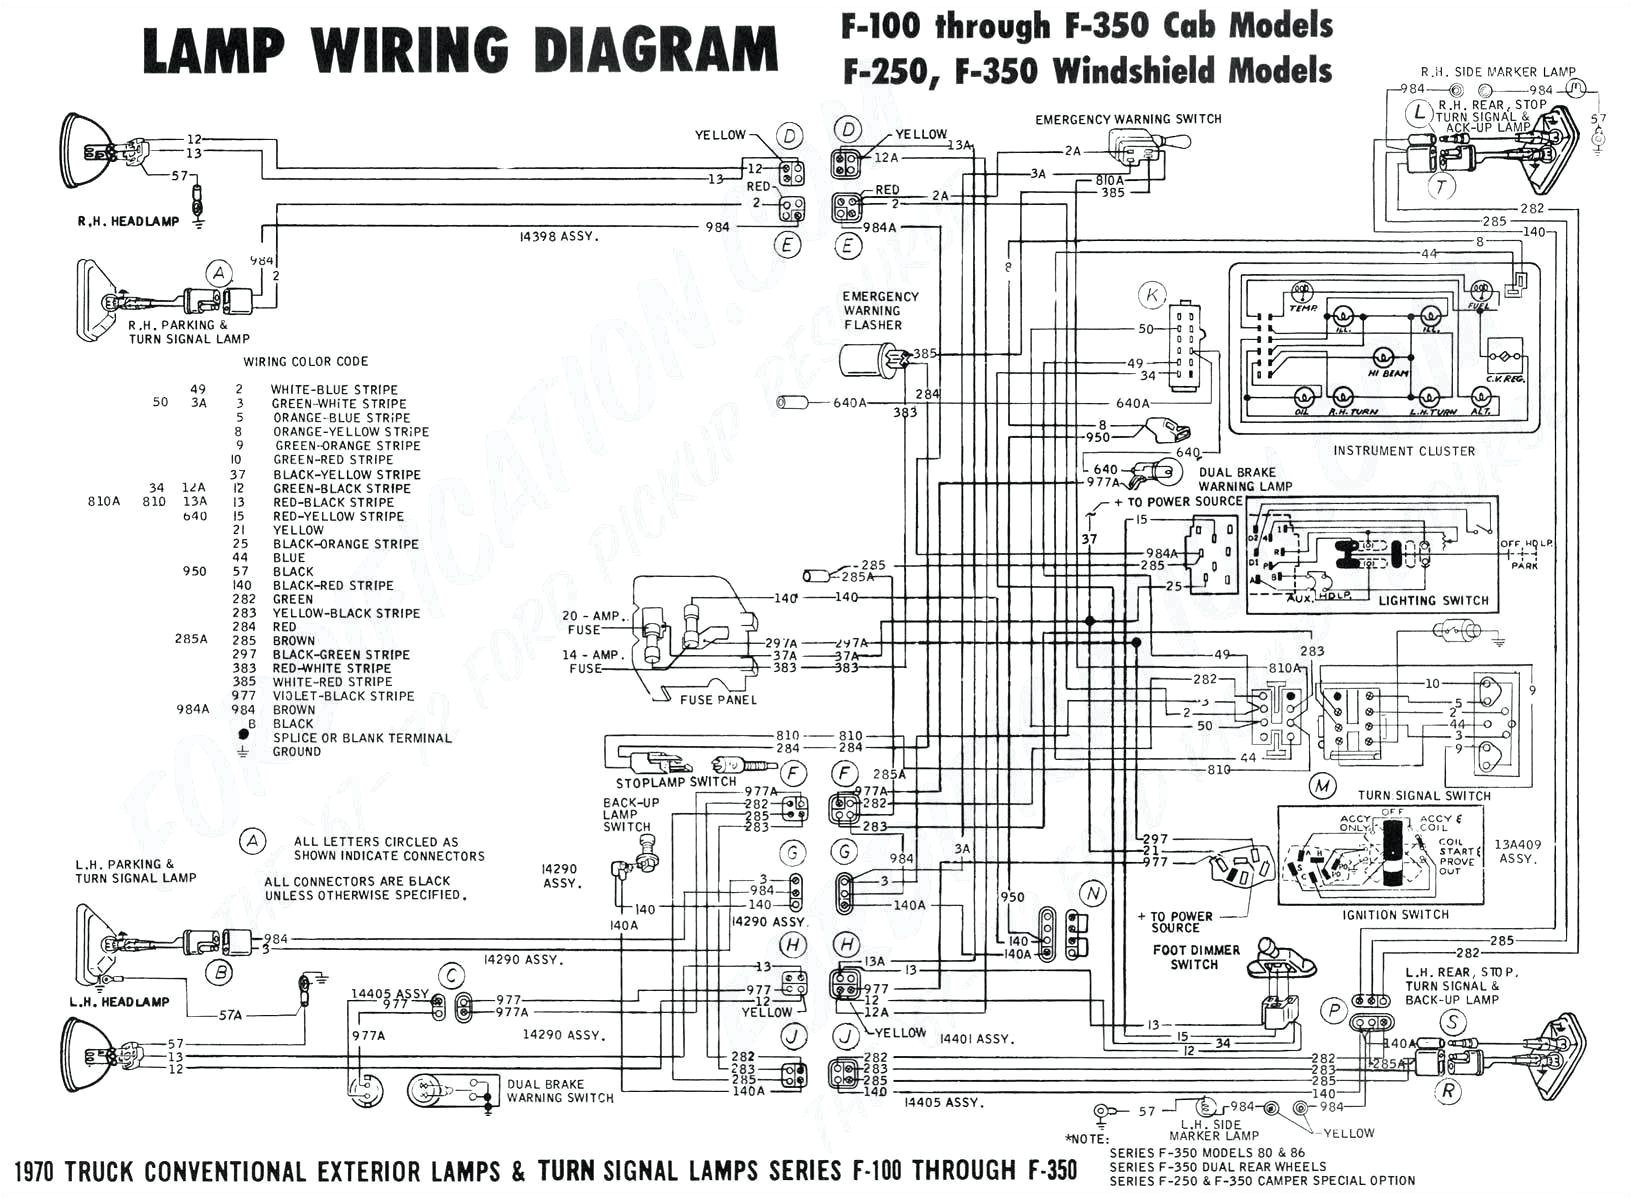 2006 chevy trailblazer trailer wiring diagram zookastar 2005 chevy silverado trailer wiring diagram jpg